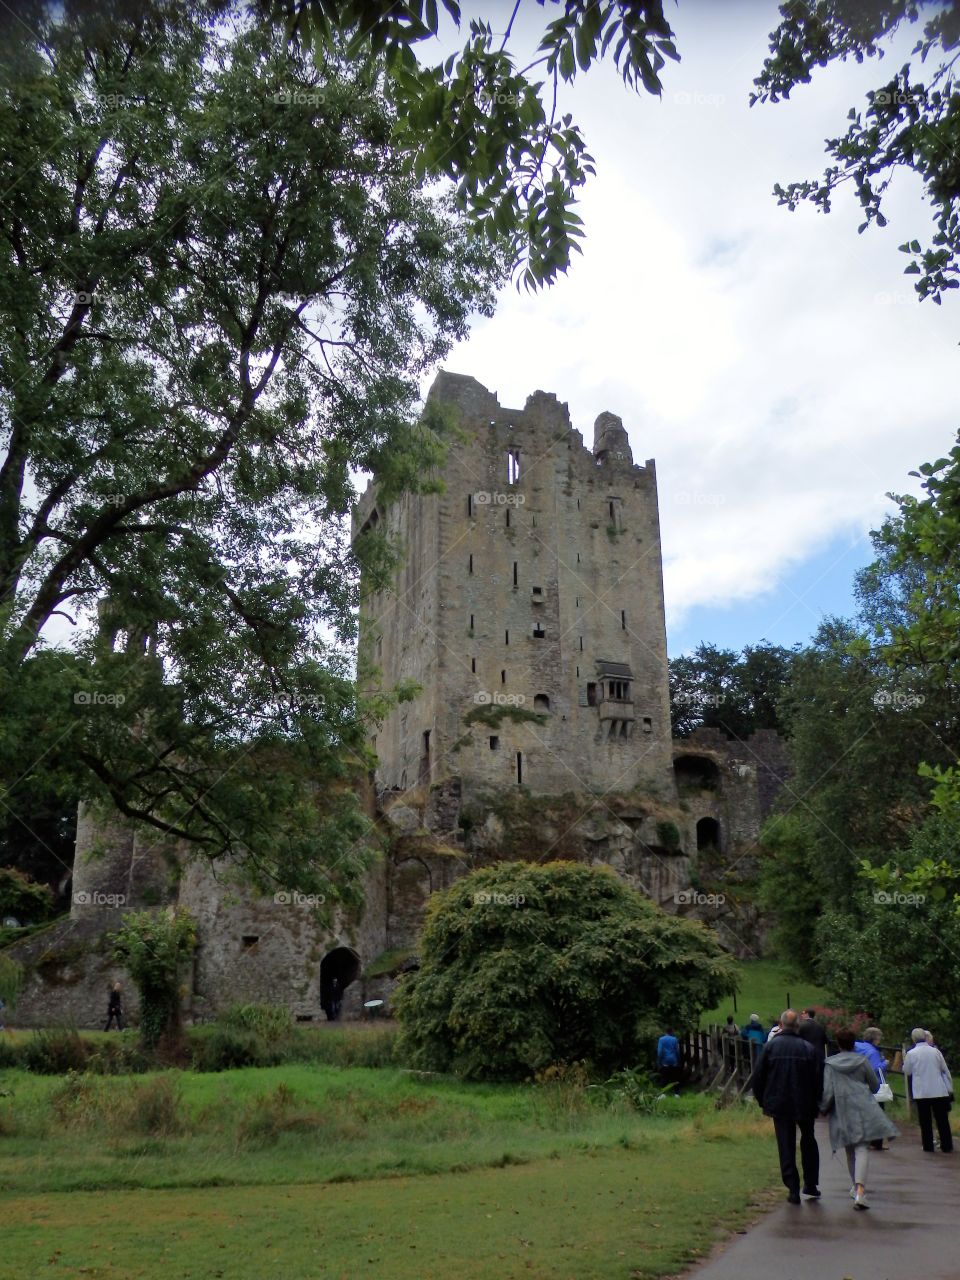 Blarney Castle
County Cork
Ireland 